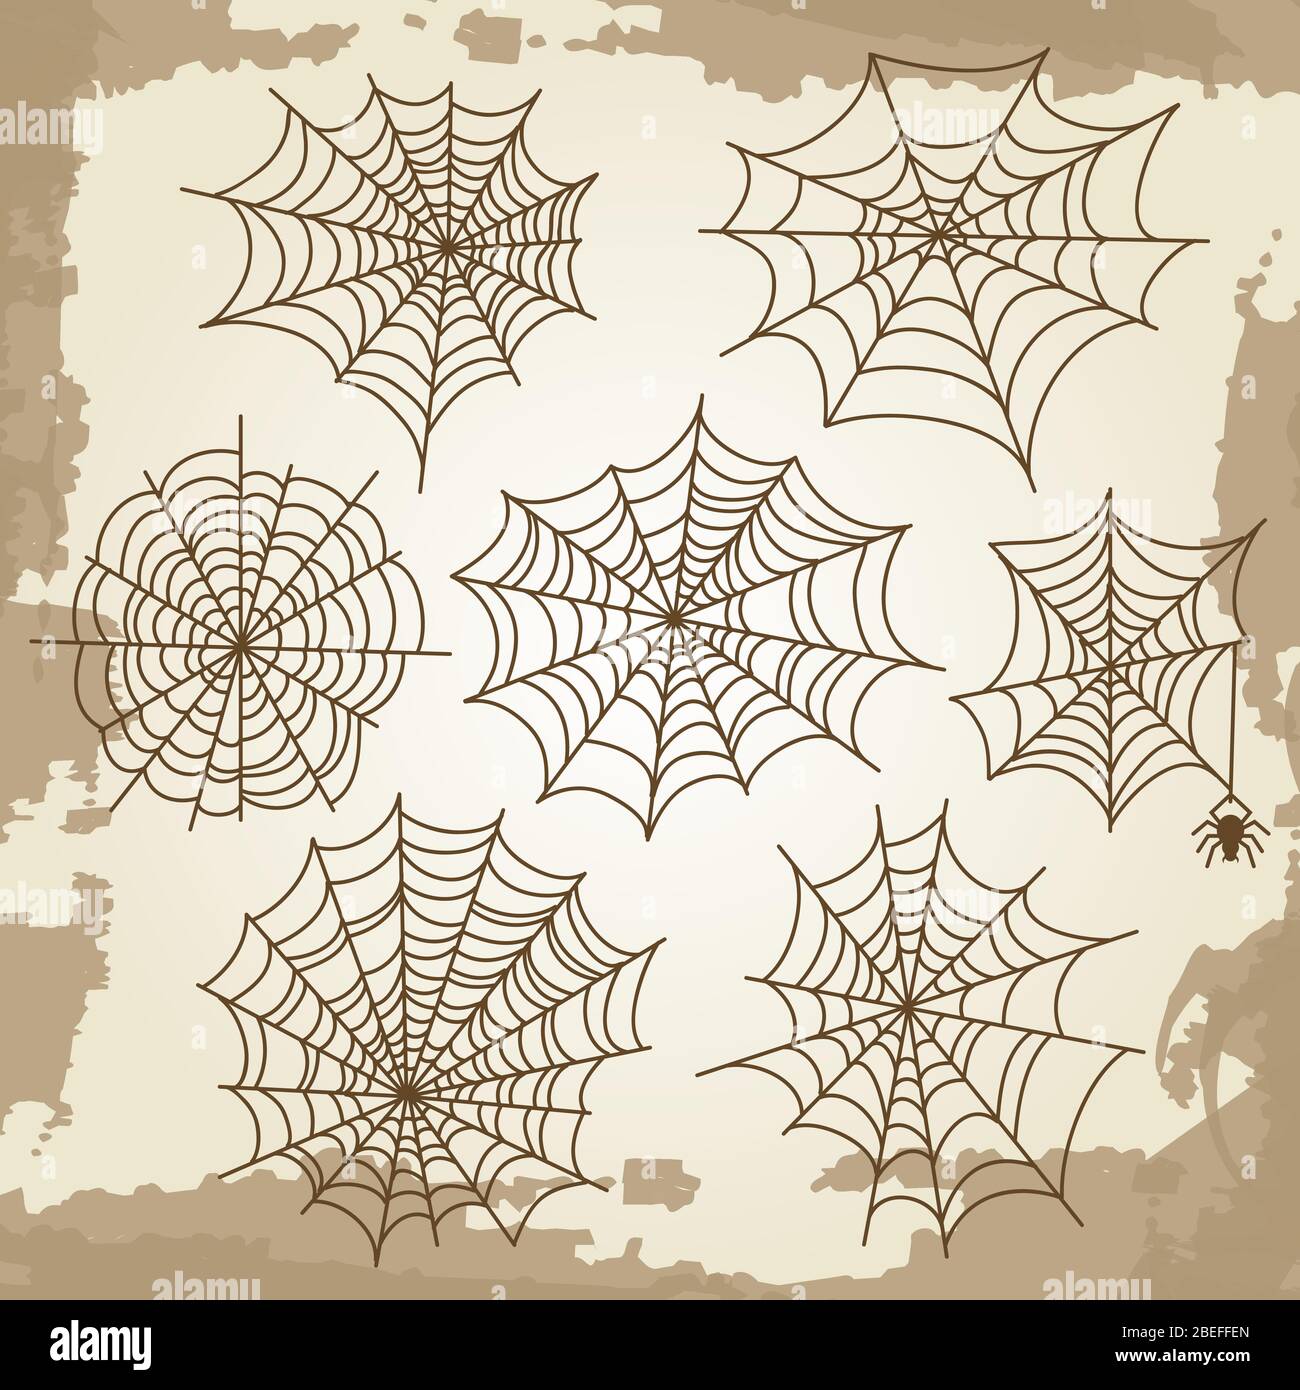 Cobweb set on grunge vintage background. Halloween spider elements. Vector illustration Stock Vector